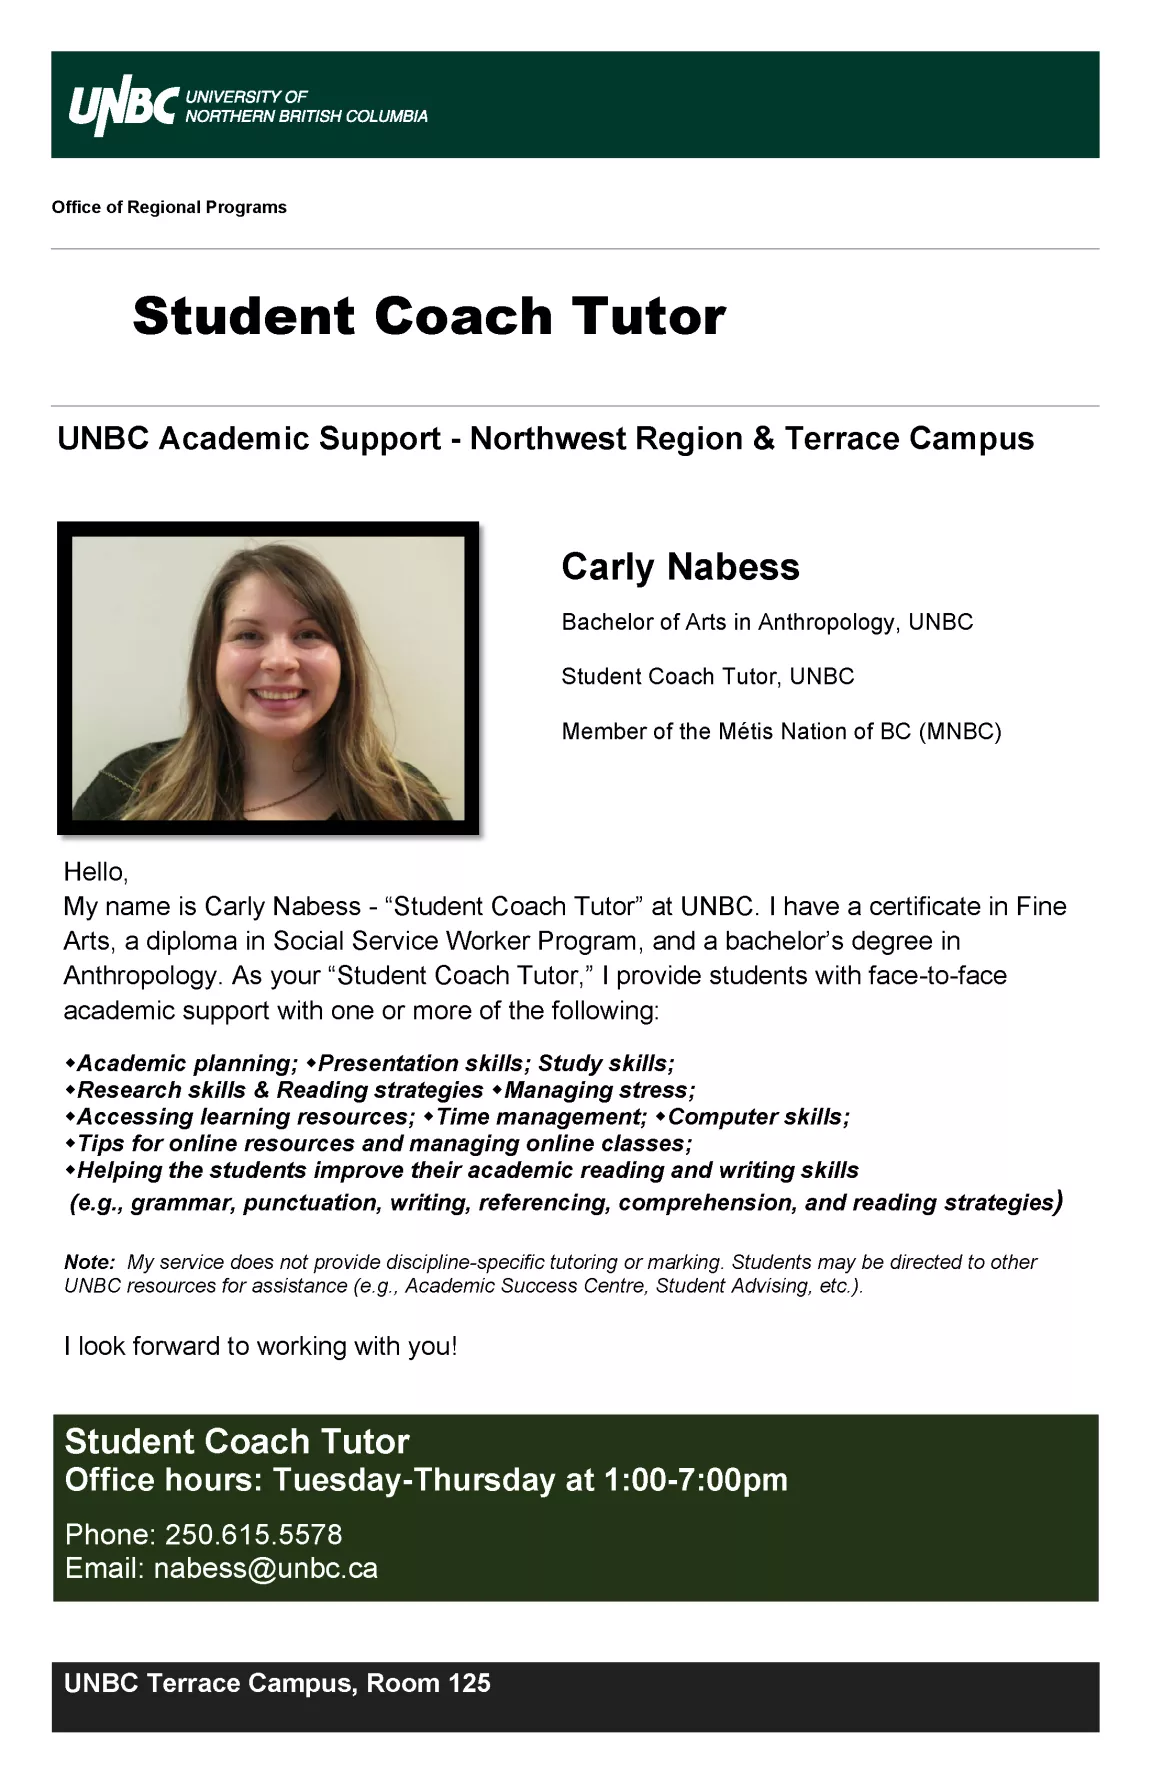 UNBC Northwest - Student Coach Teacher - Carly Nabess